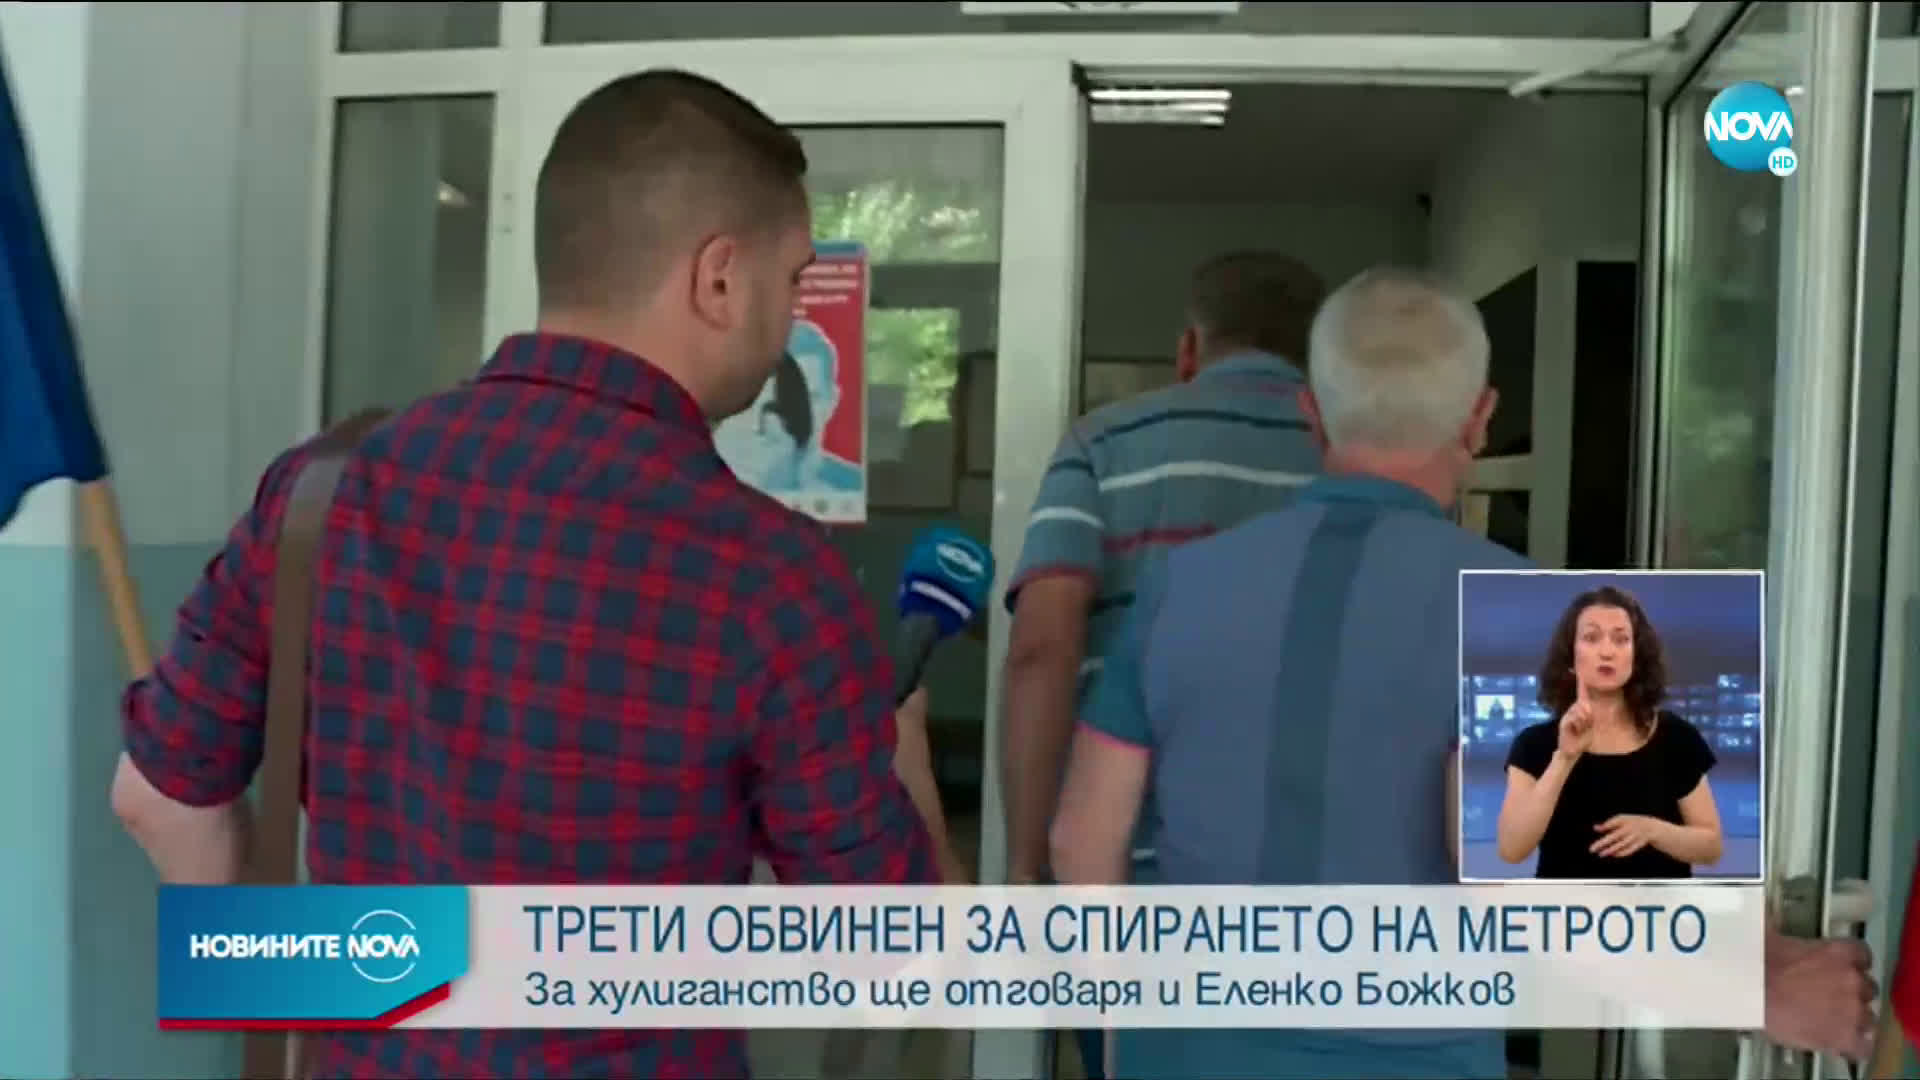 Повдигнаха обвинение и на Еленко Божков заради случая с метрото